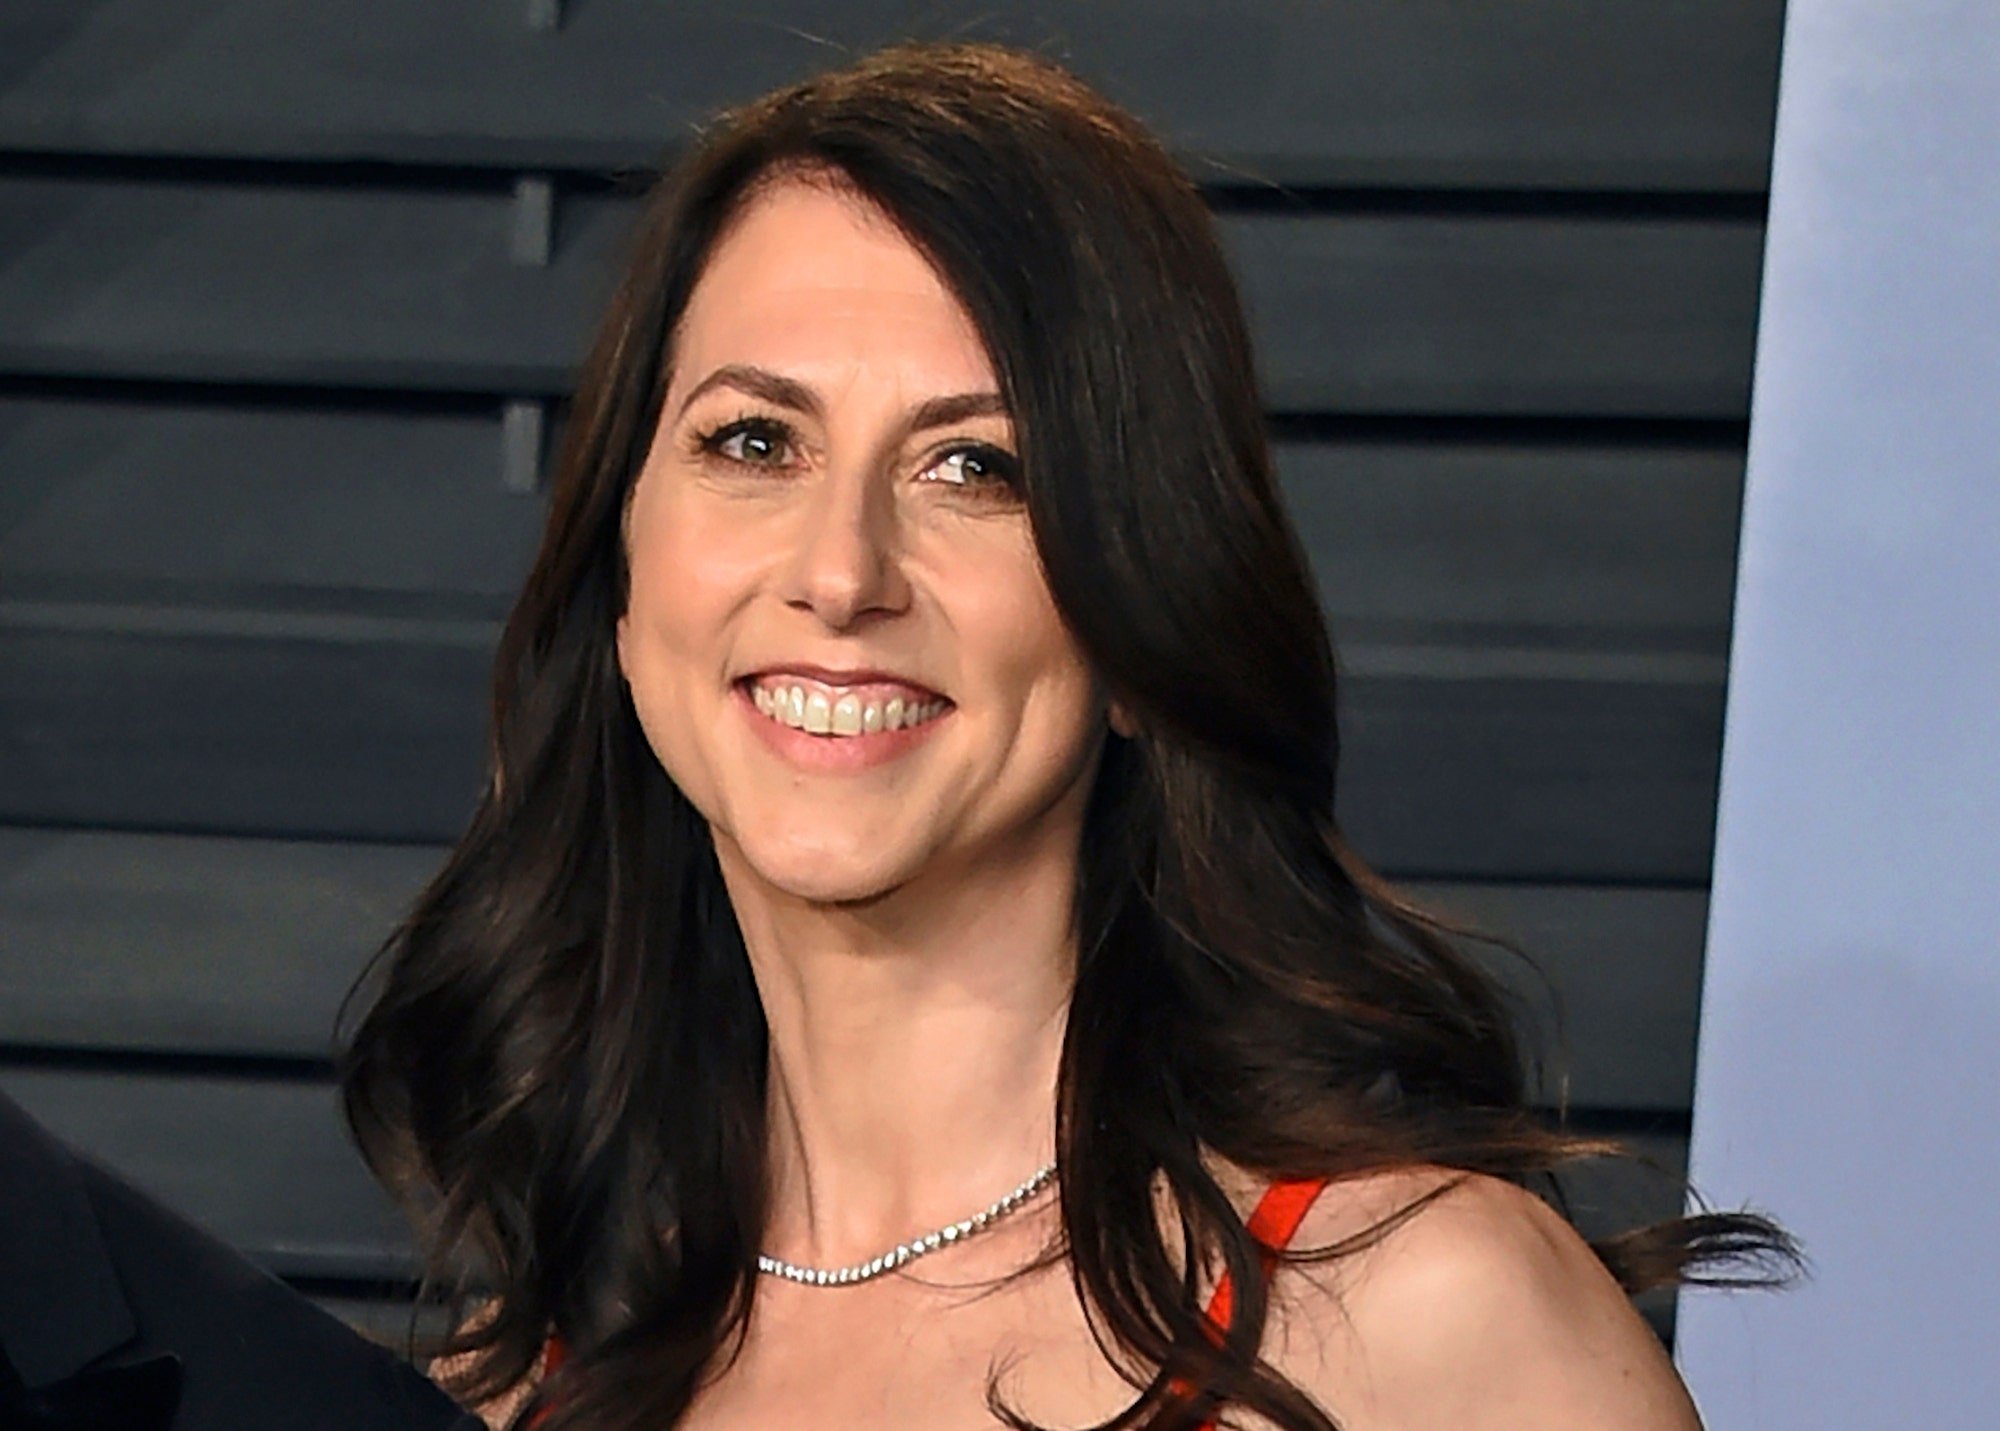 MacKenzie Scott, ex-wife of Jeff Bezos, donates $25M to Indiana charity